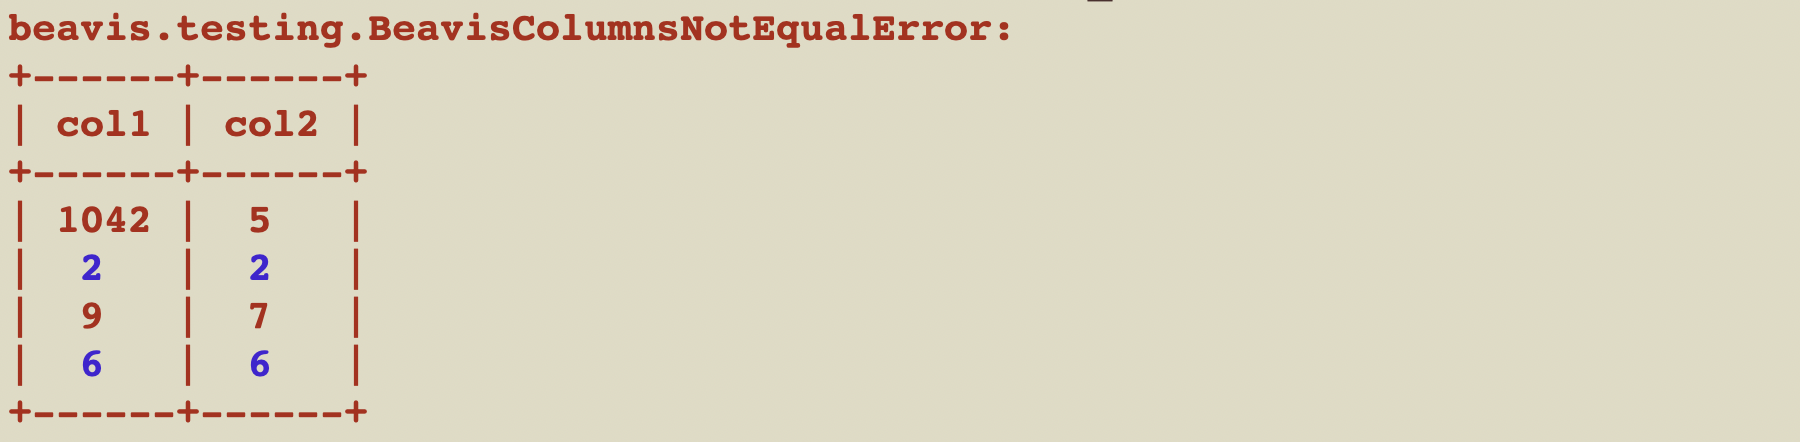 beavis_columns_not_equal_error